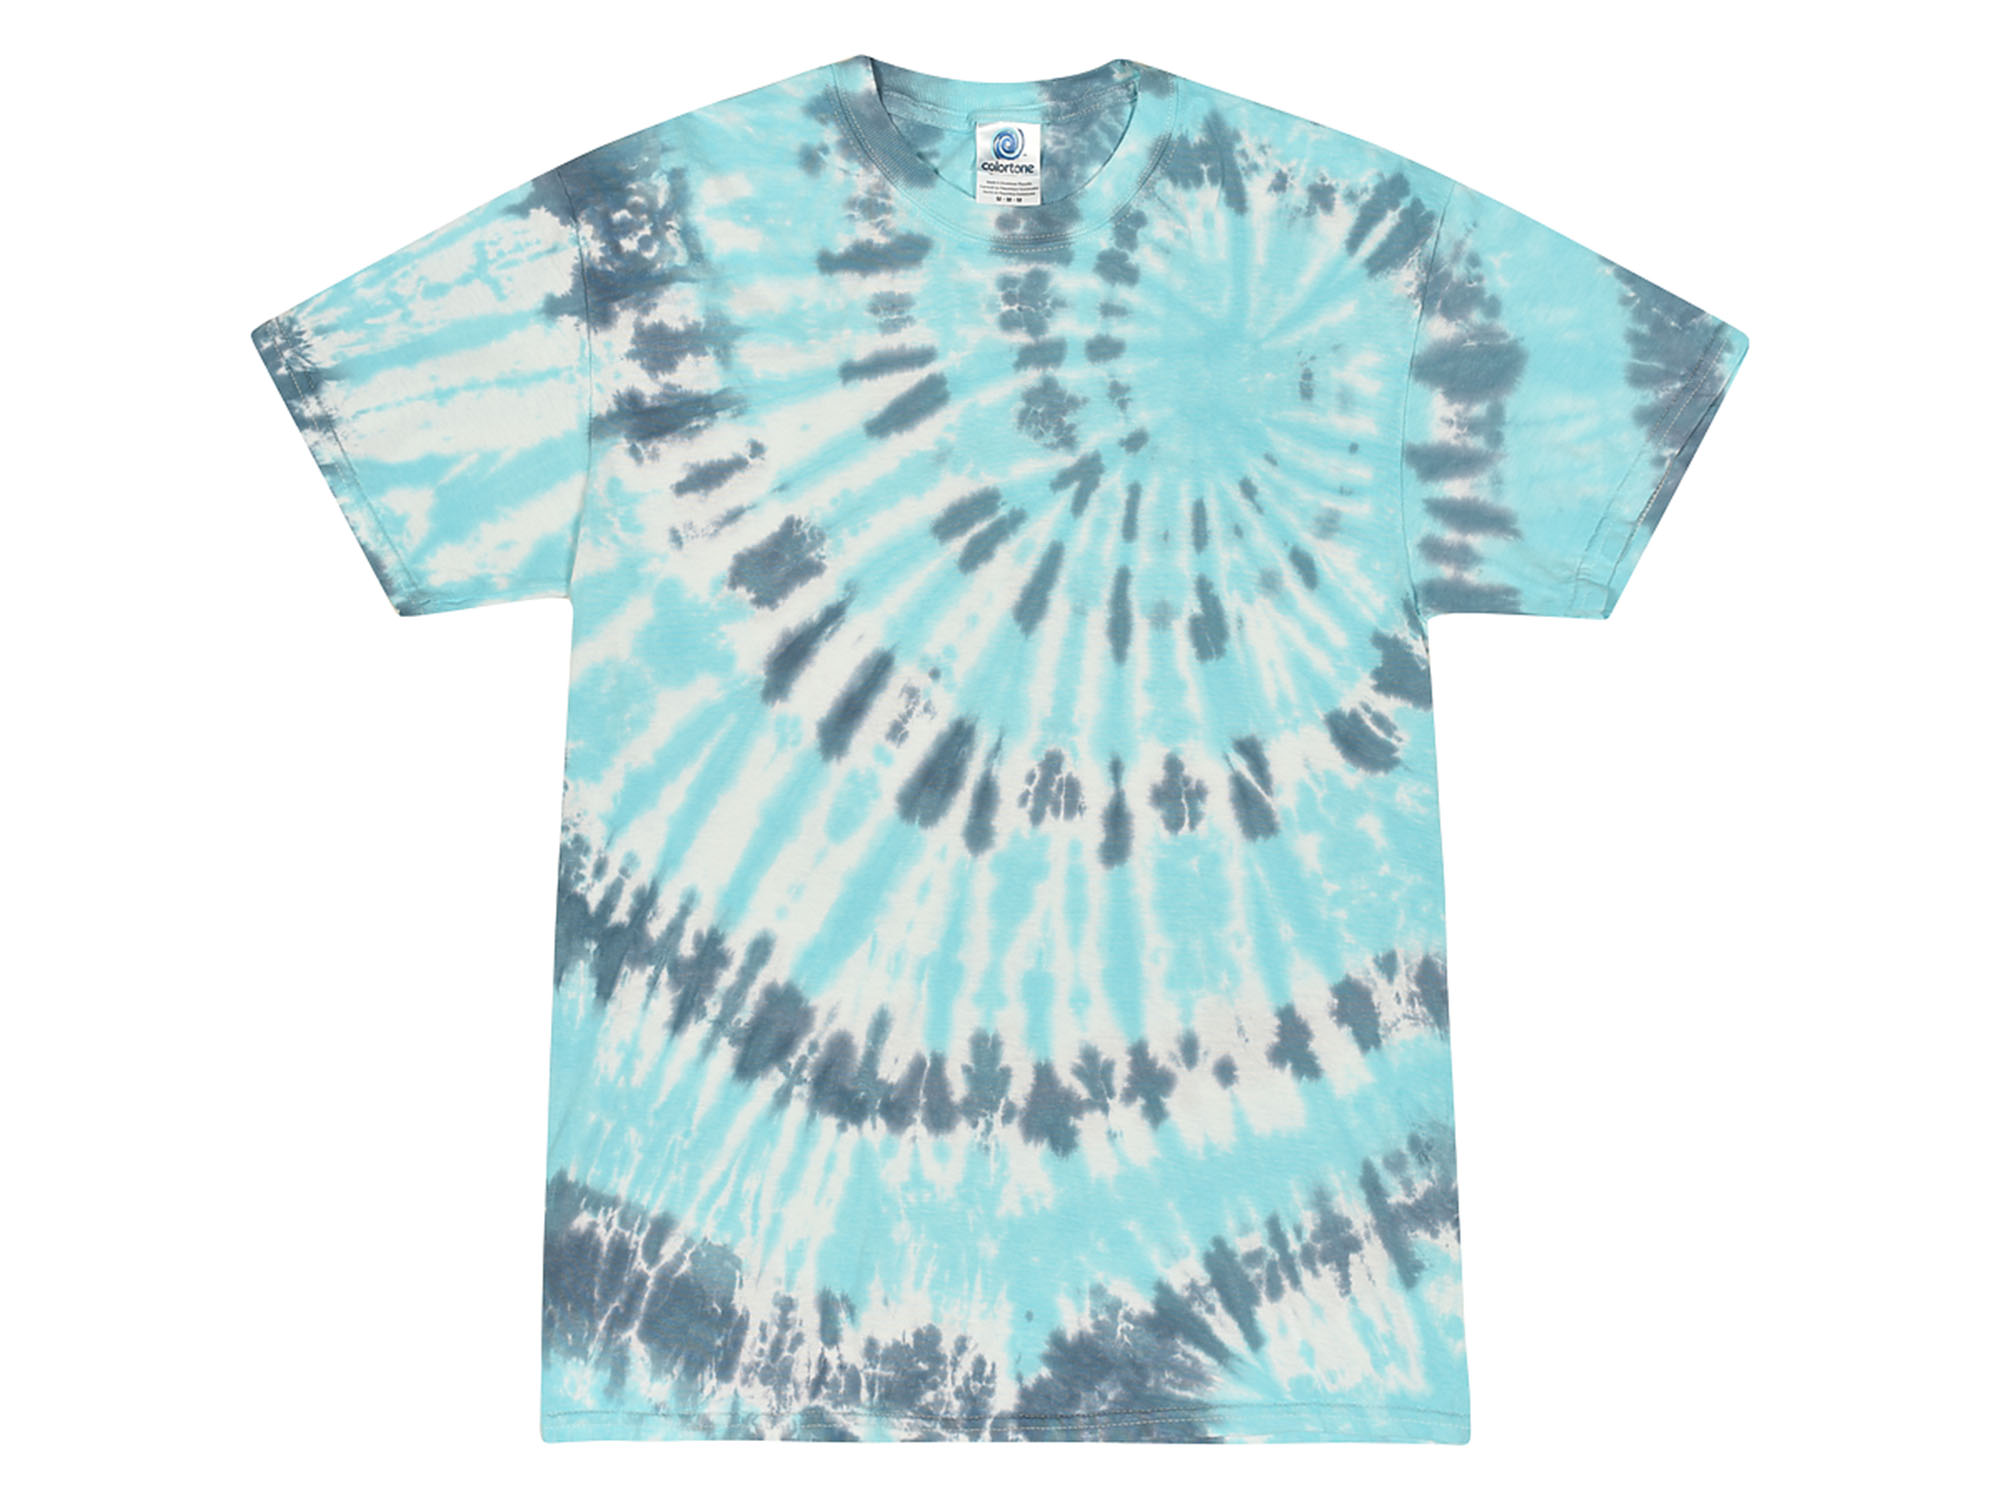 Coral Reef Tie Dye T-Shirt | Blue | Colortone T-Shirts | Tiedyespace.com